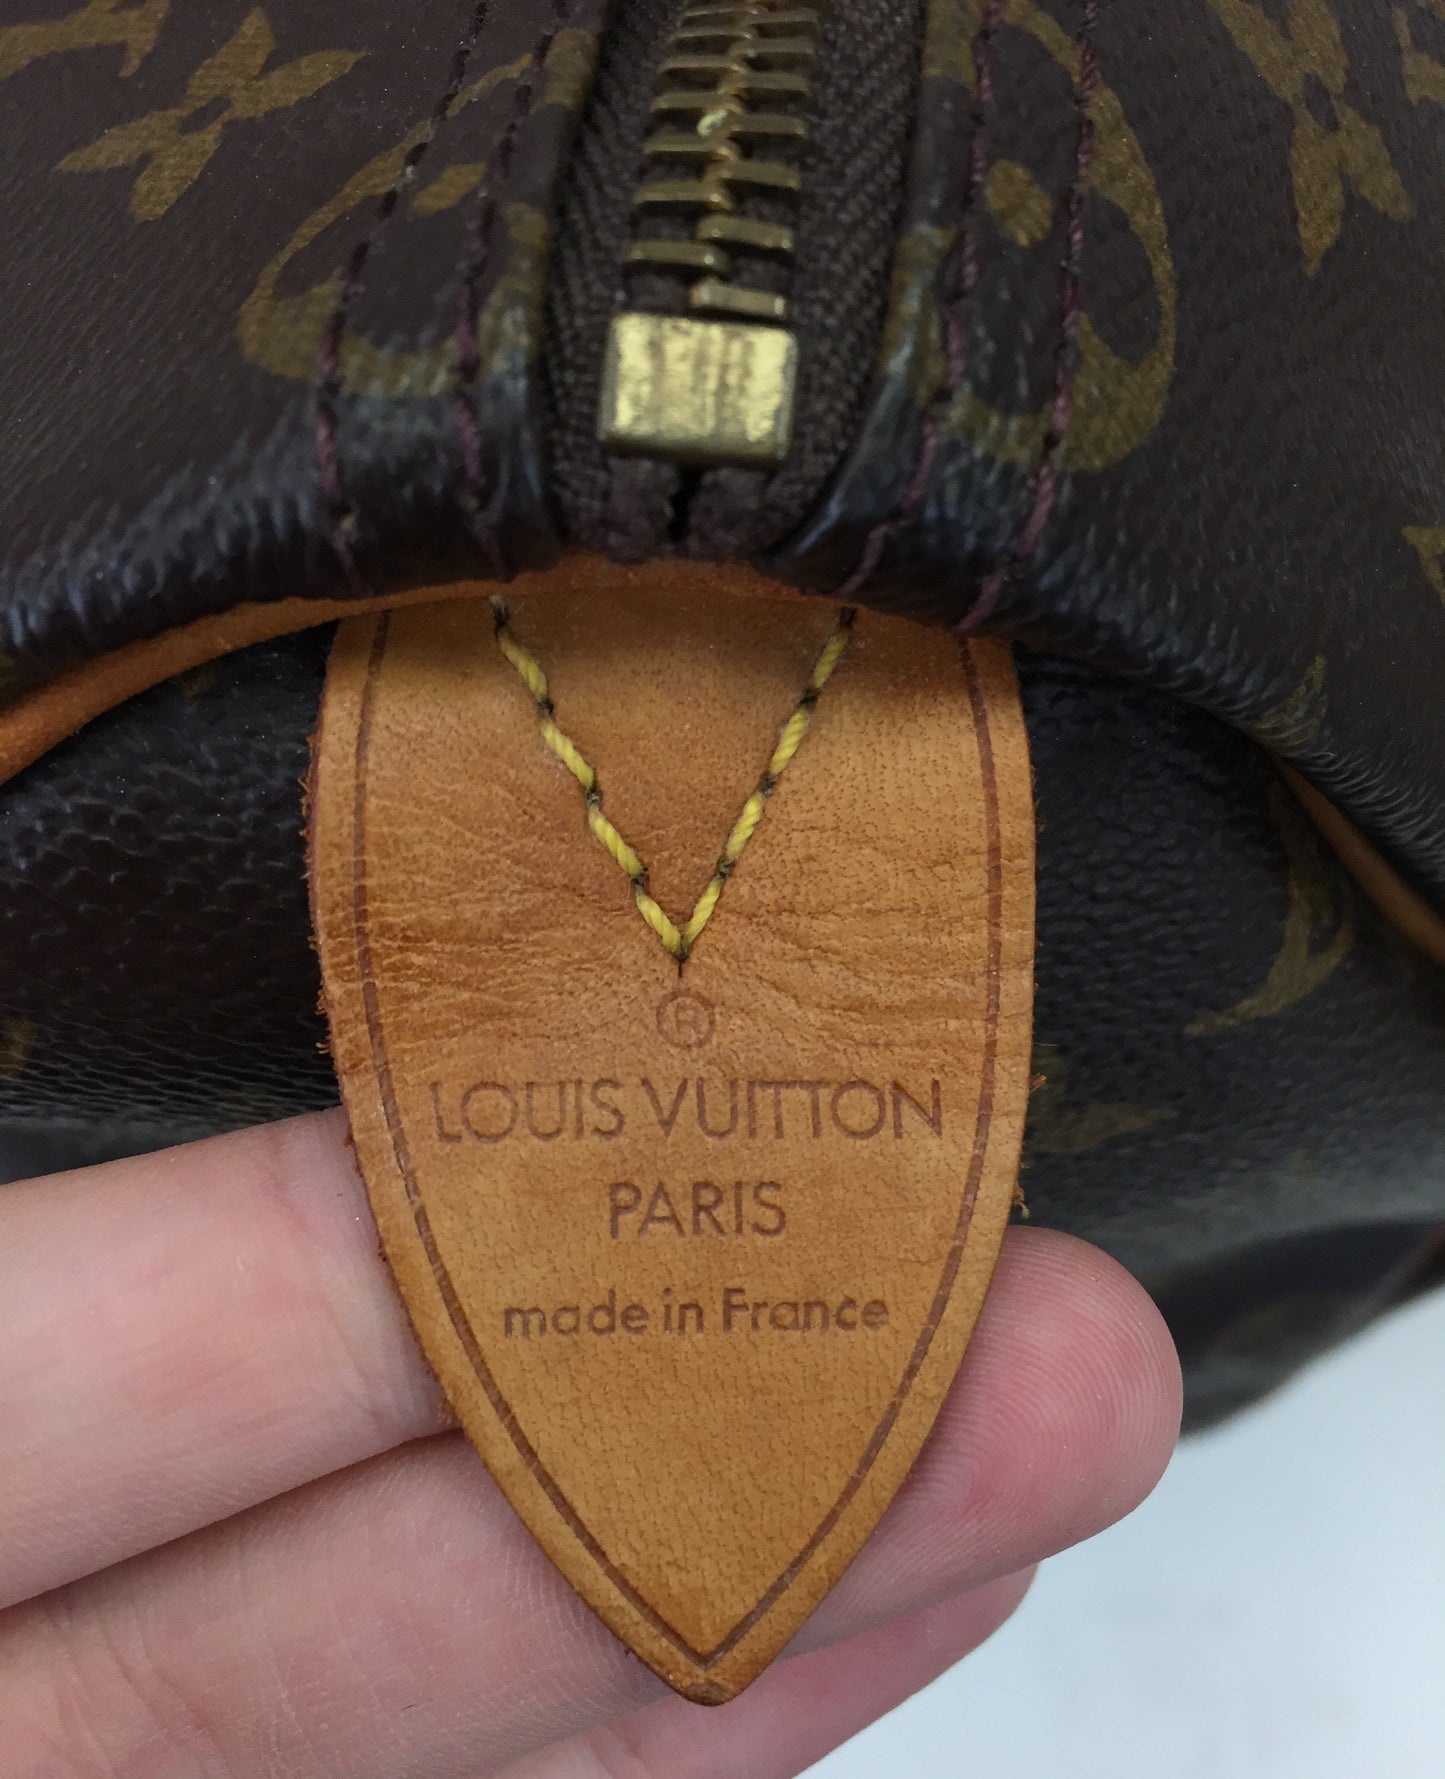 Authentic Louis Vuitton Monogram Speedy 35